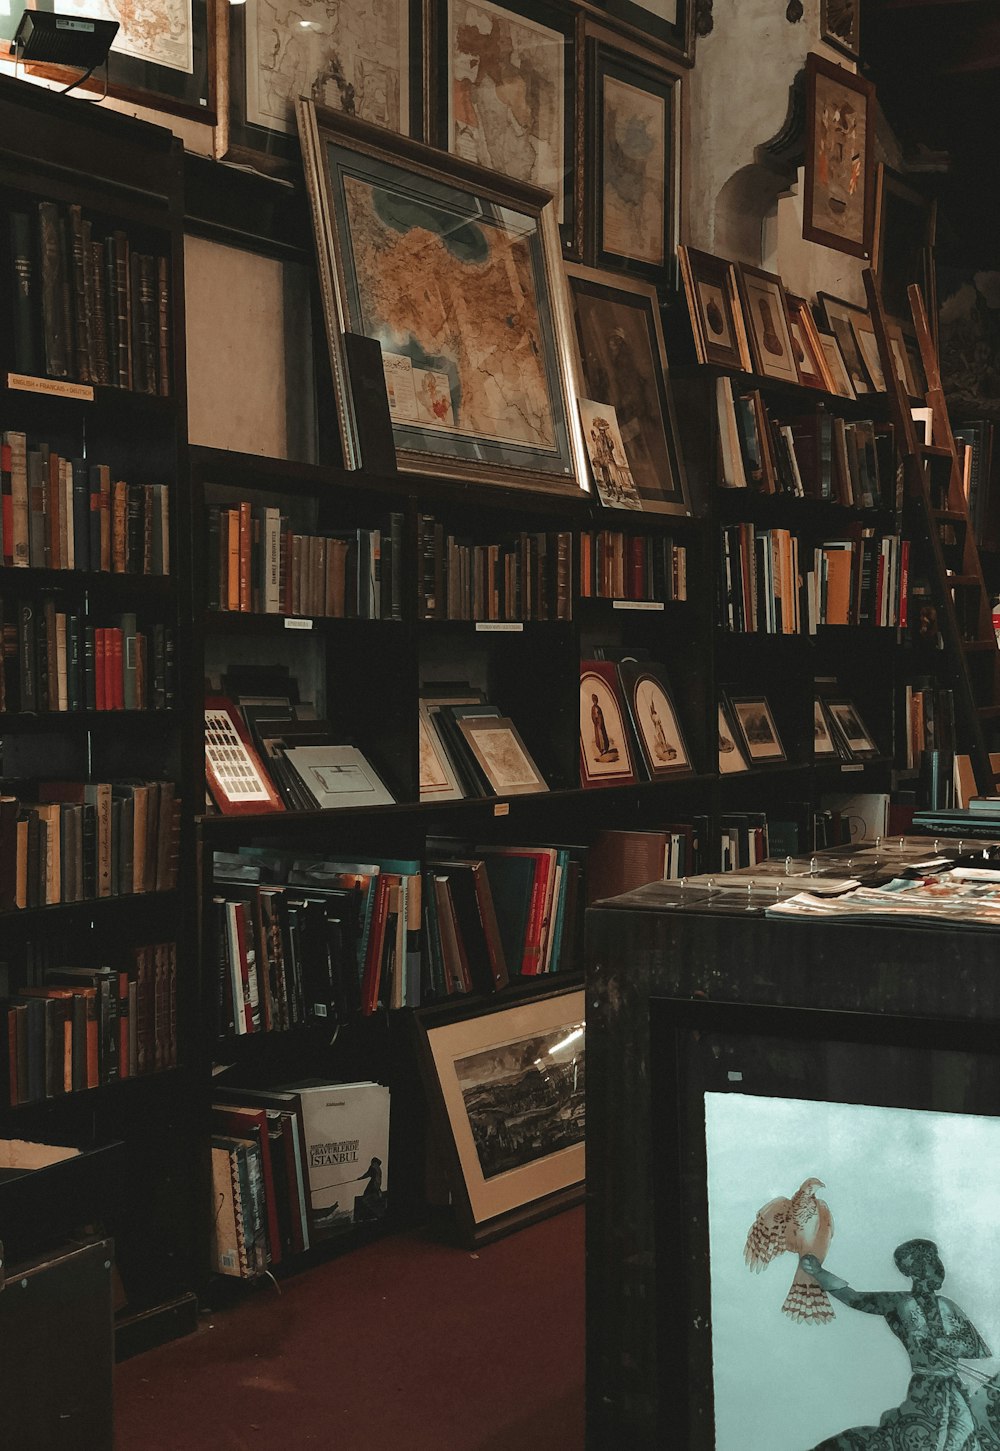 bookshelf with books